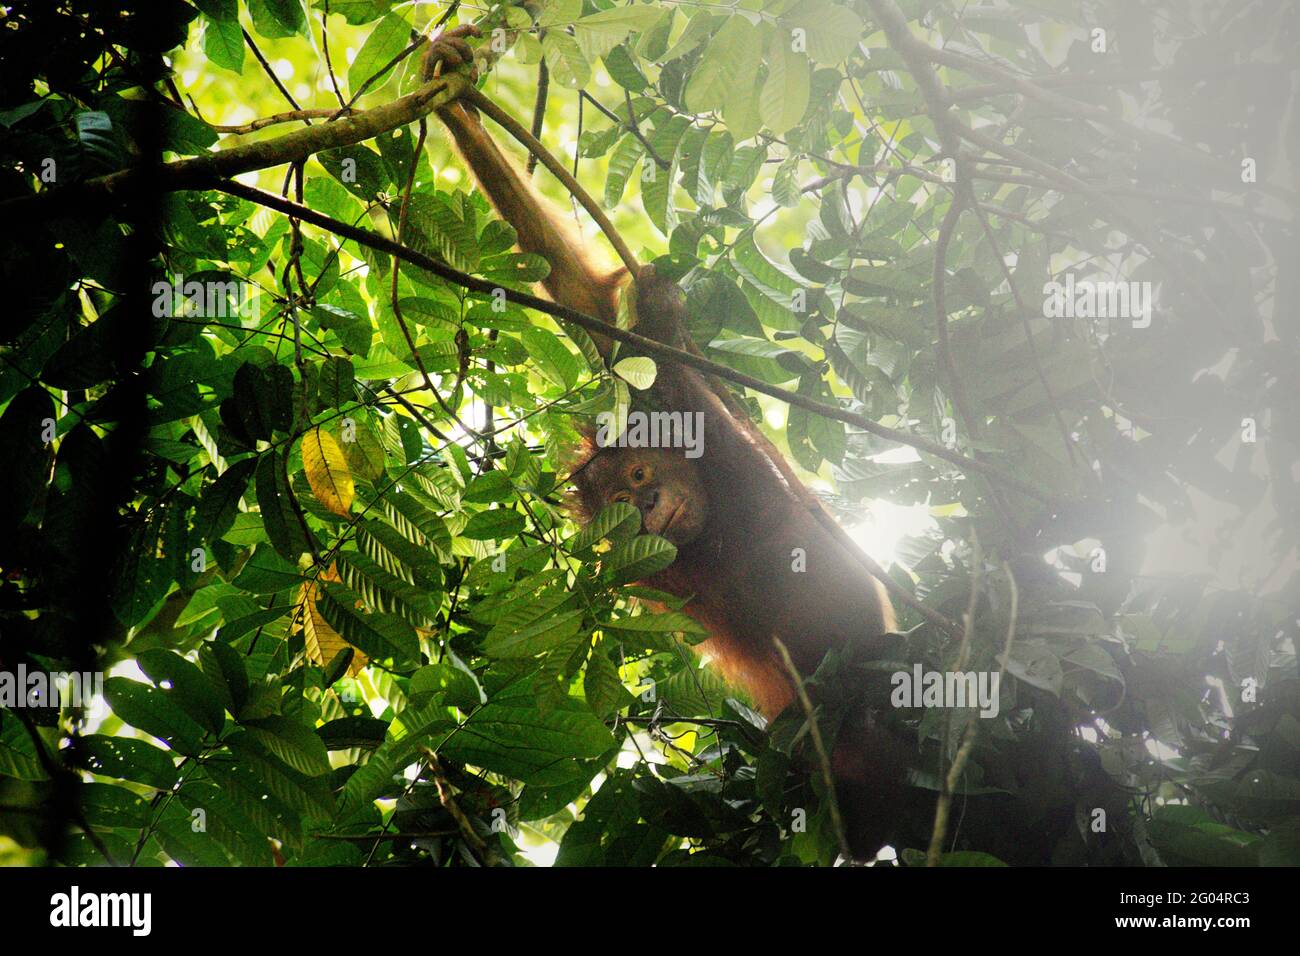 Wild orangutan baby. Northeast Bornean orangutan (Pongo pygmaeus morio) at Kutai National Park, East Kalimantan, Indonesia. Kutai National Park is considered as one of the last natural habitats where wild orangutan can be observed. Stock Photo